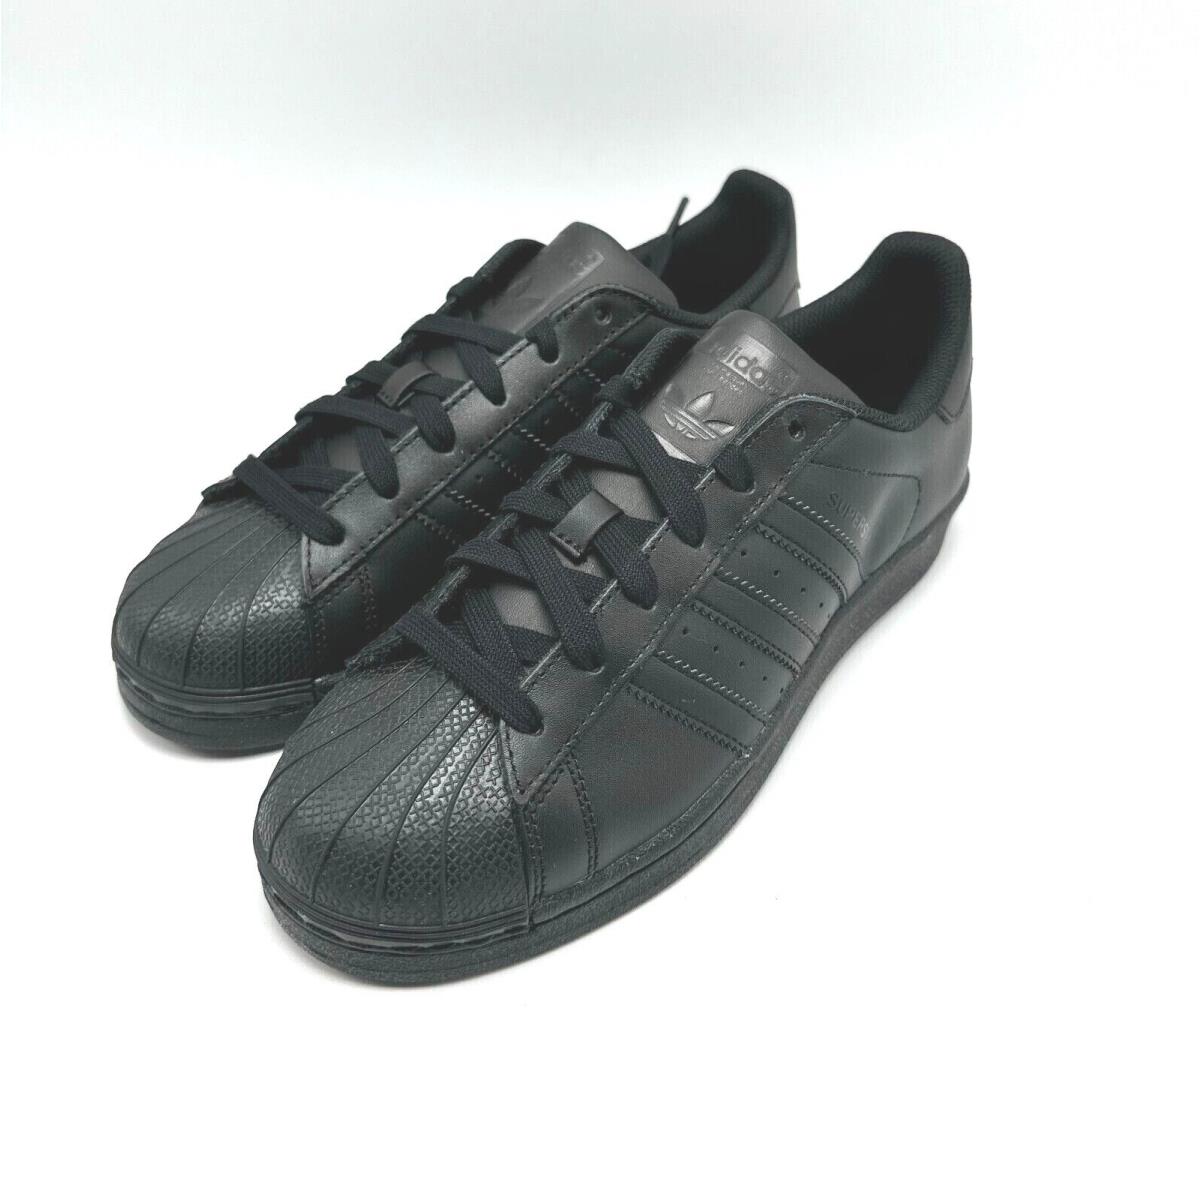 Adidas Originals Superstar Triple Black Youth Shoes B25724 sz 5.5/6.5